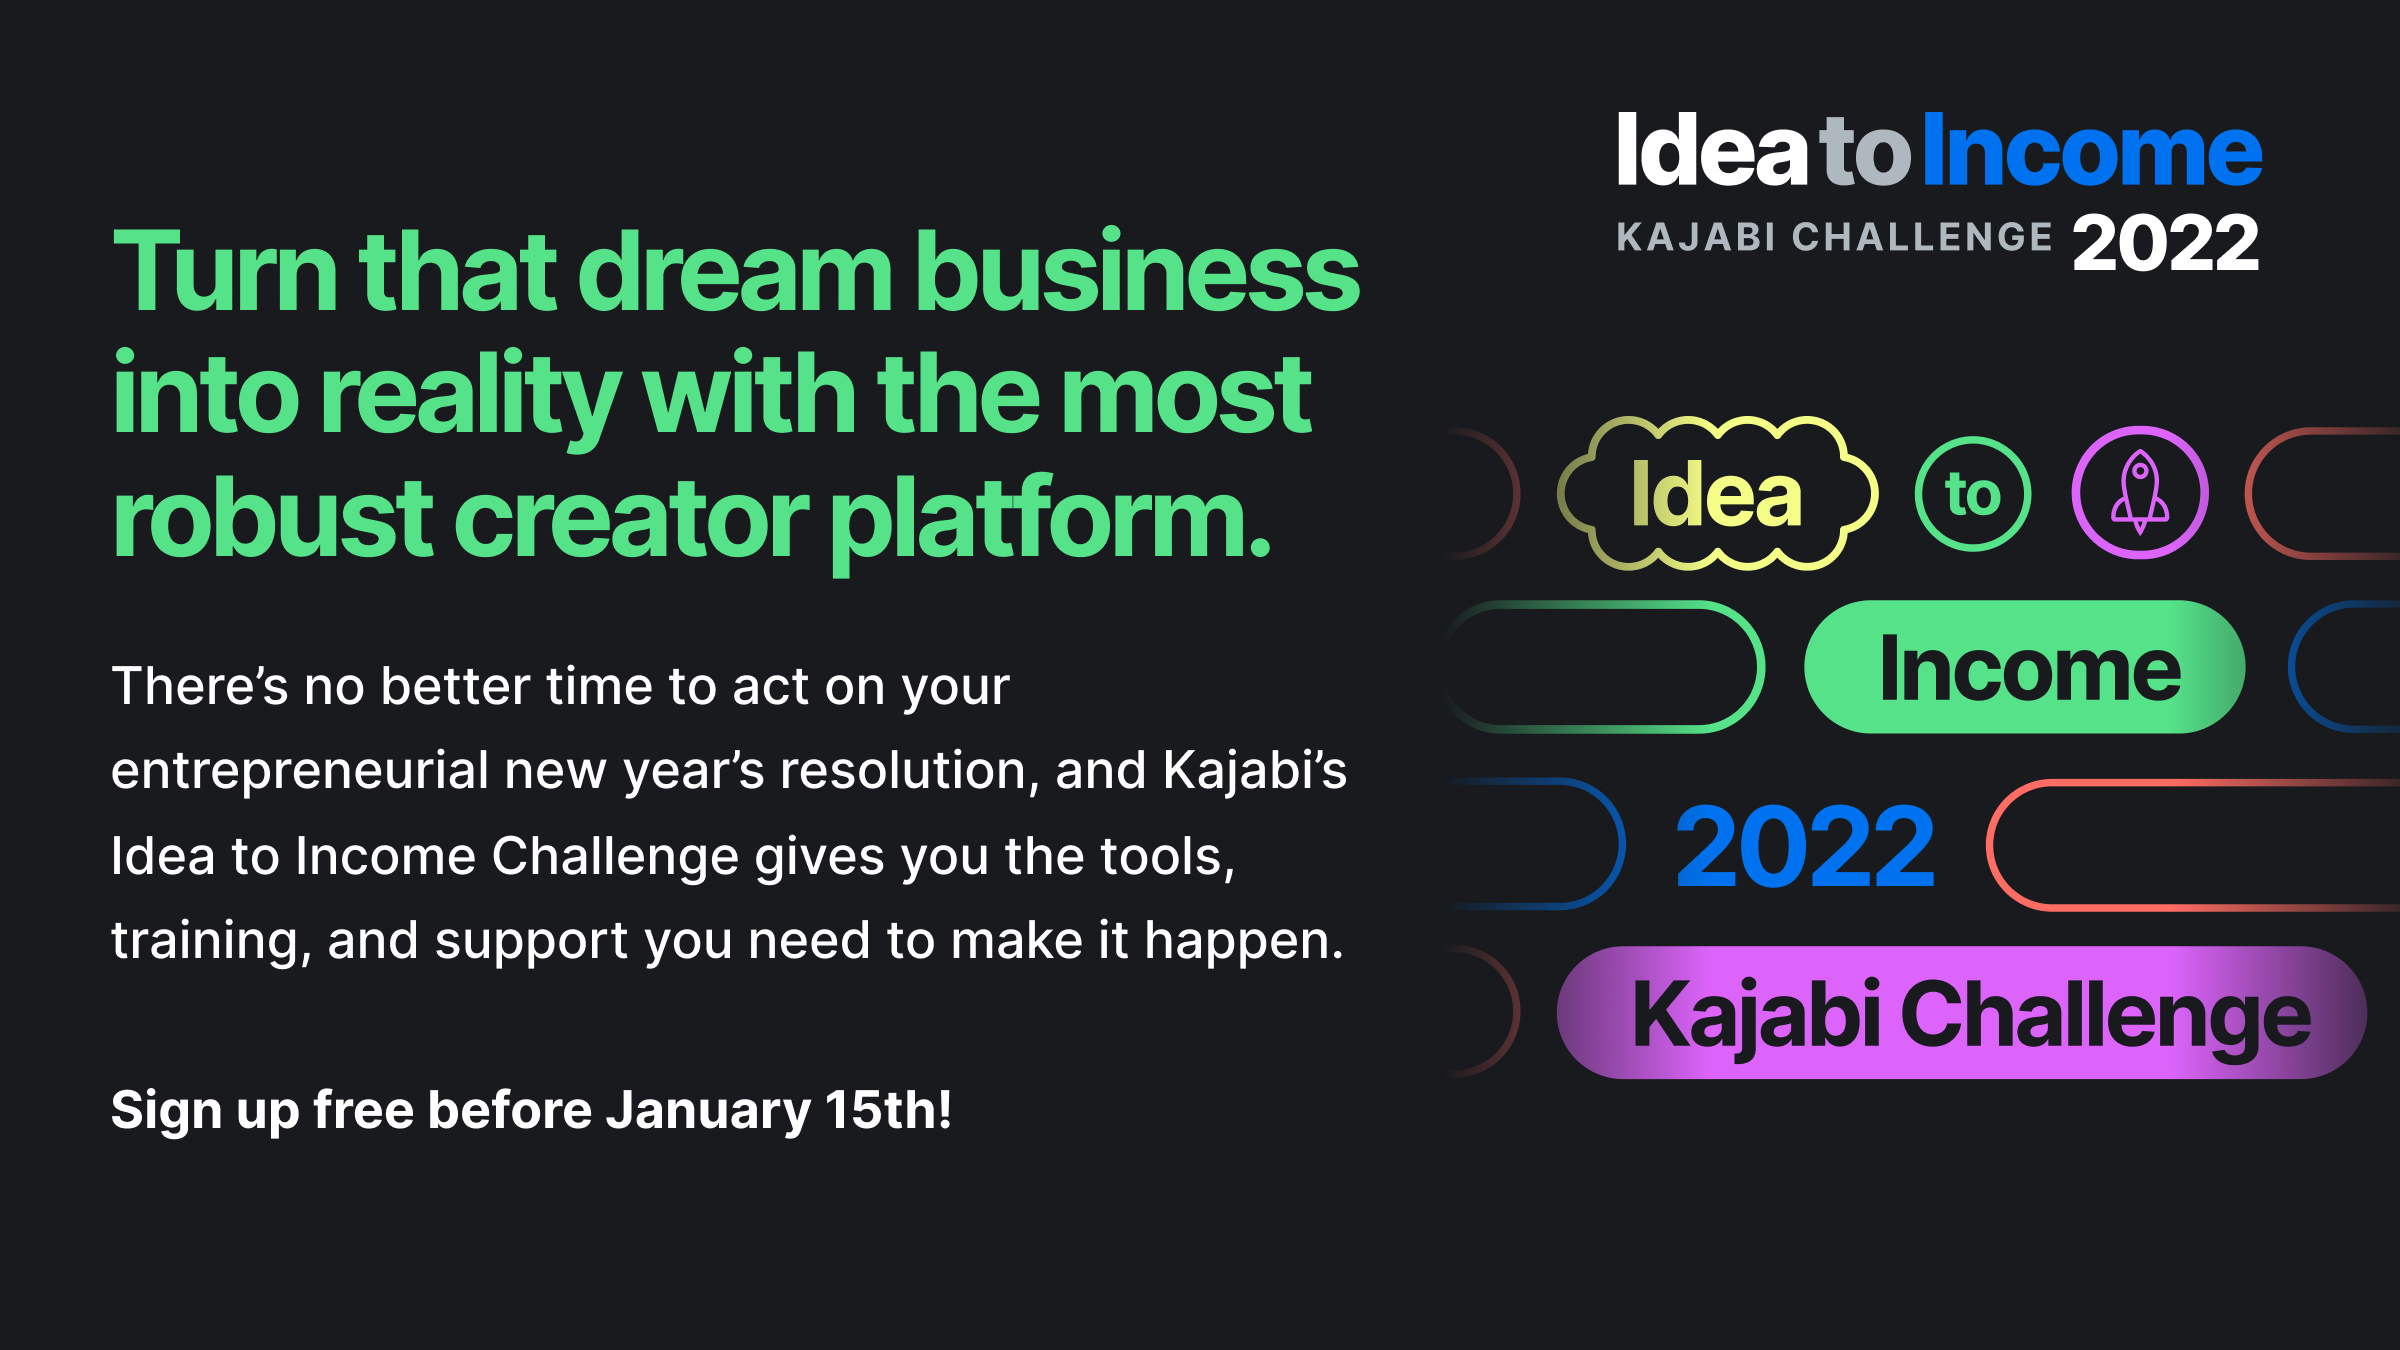 Idea to income Kajabi challenge 2022